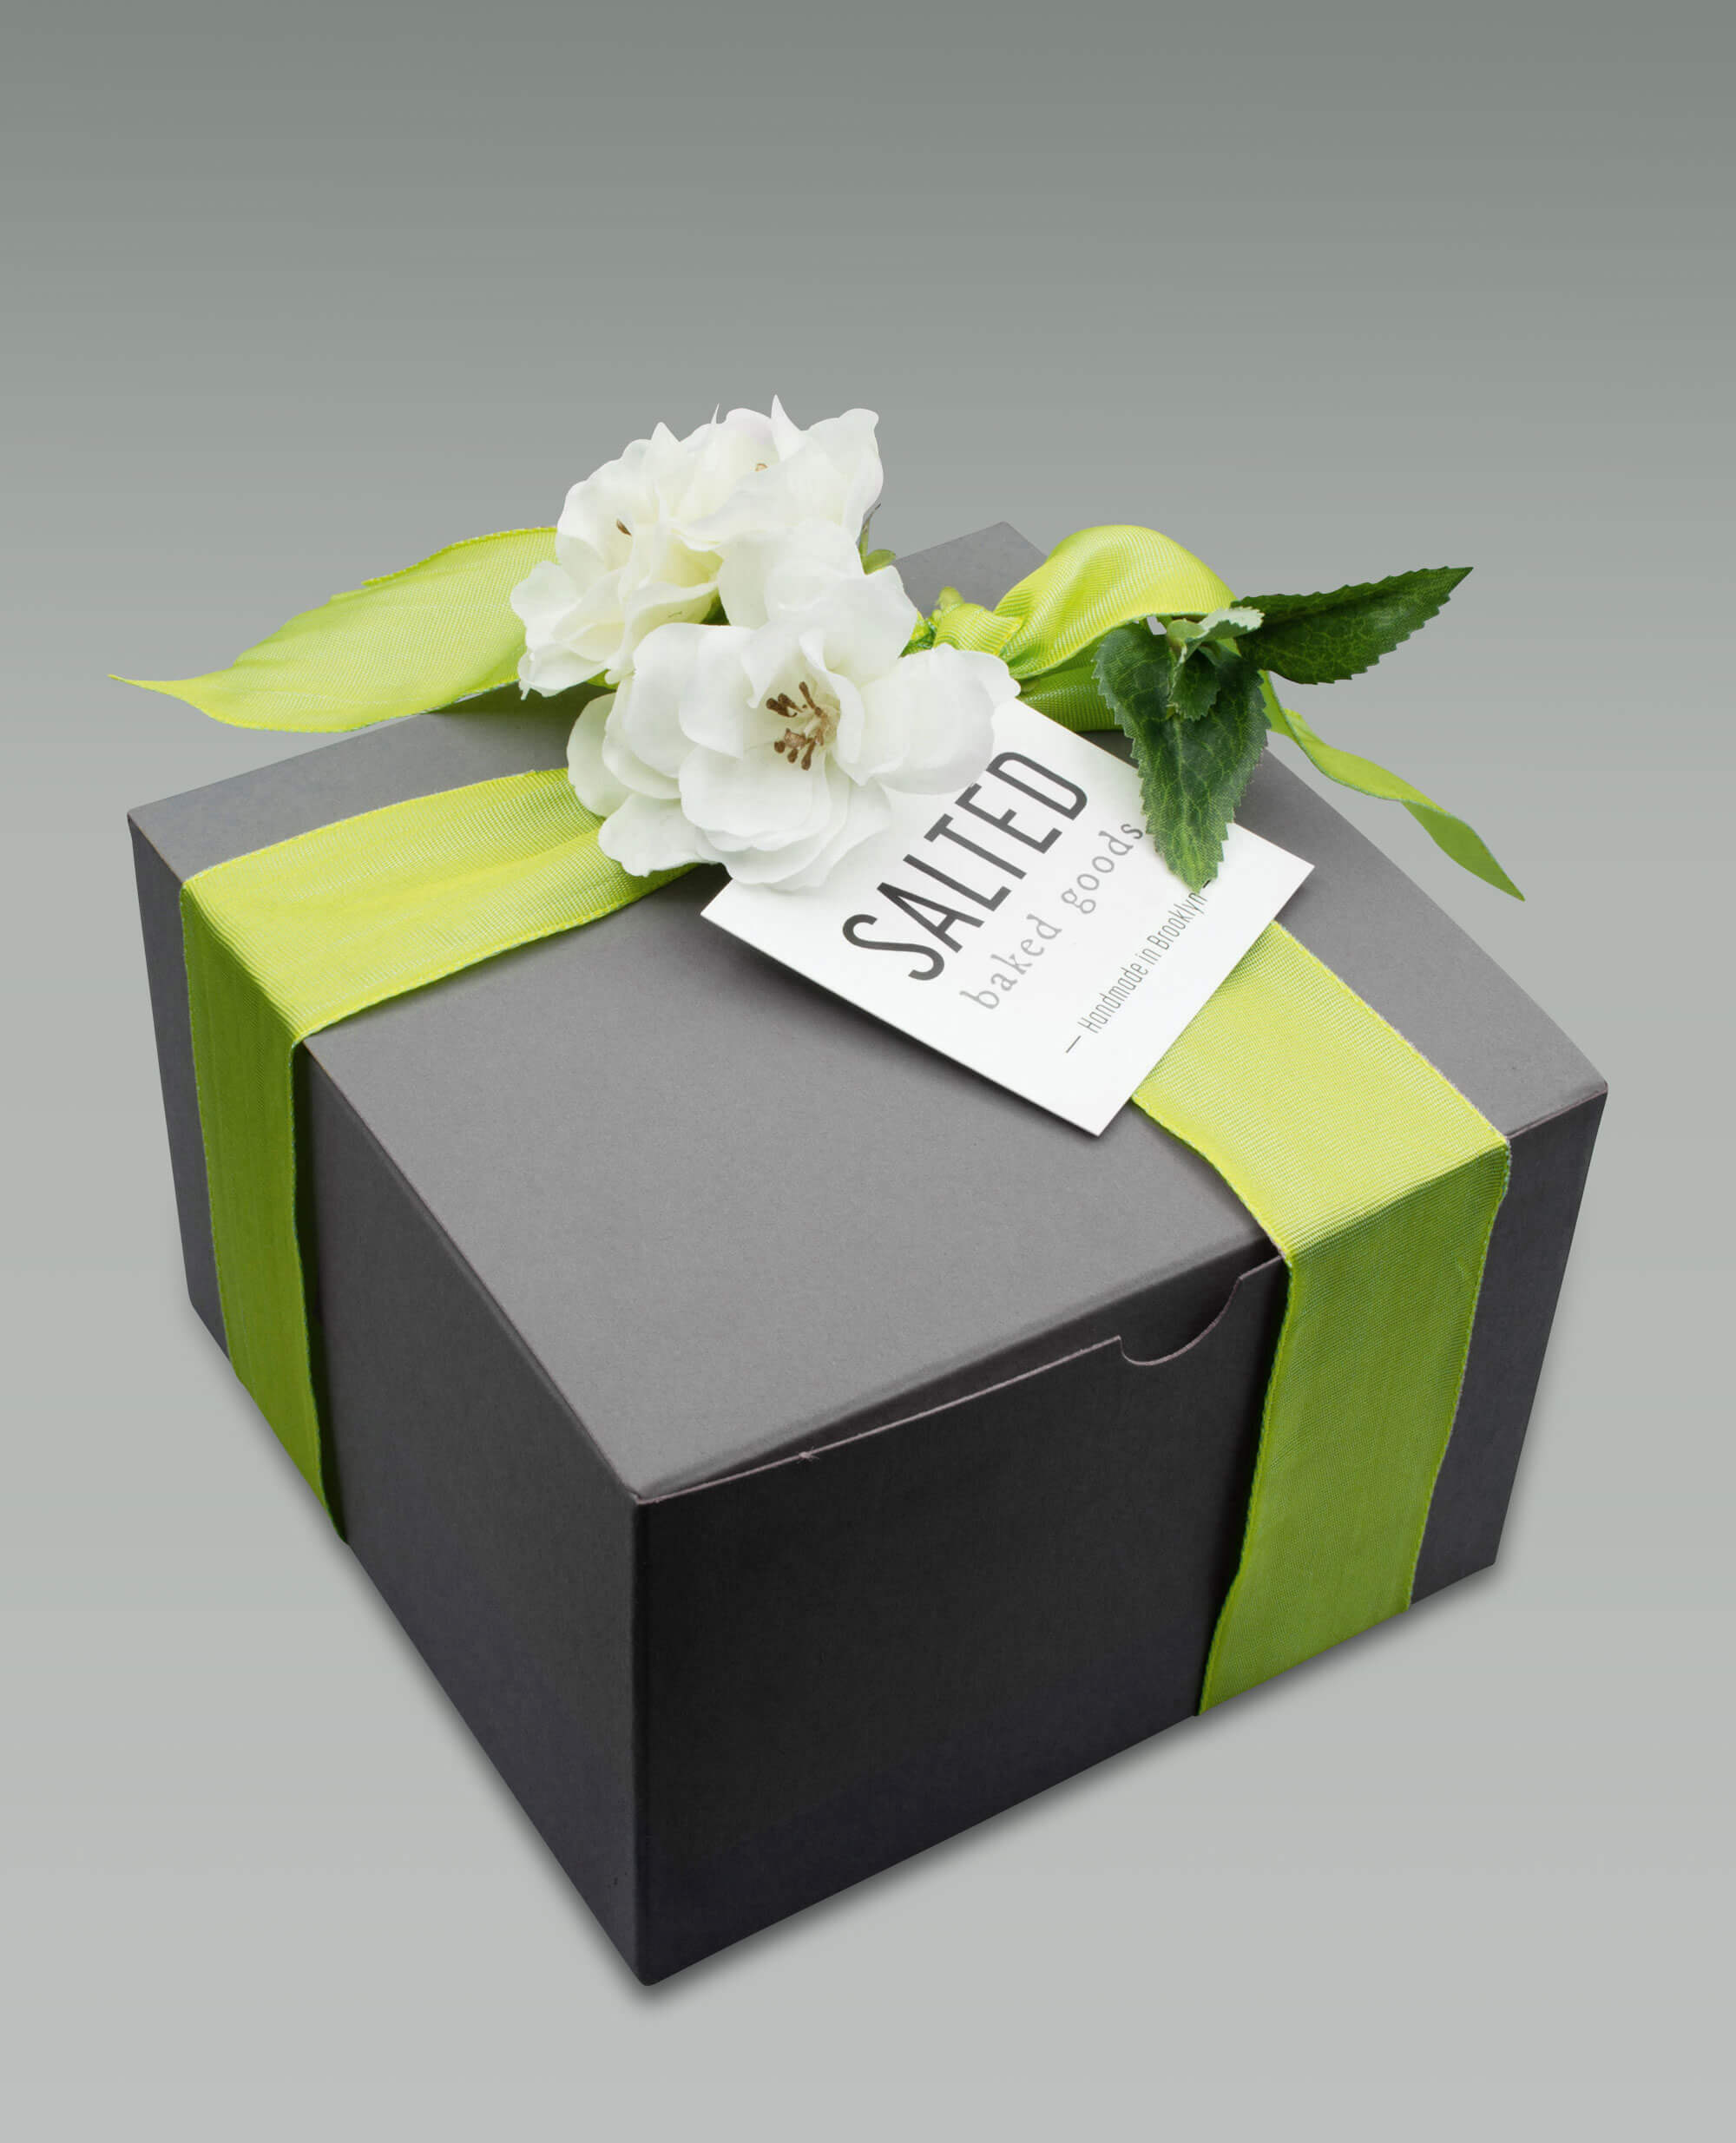 Seasonal Baker’s Gift Box - Floral Edition